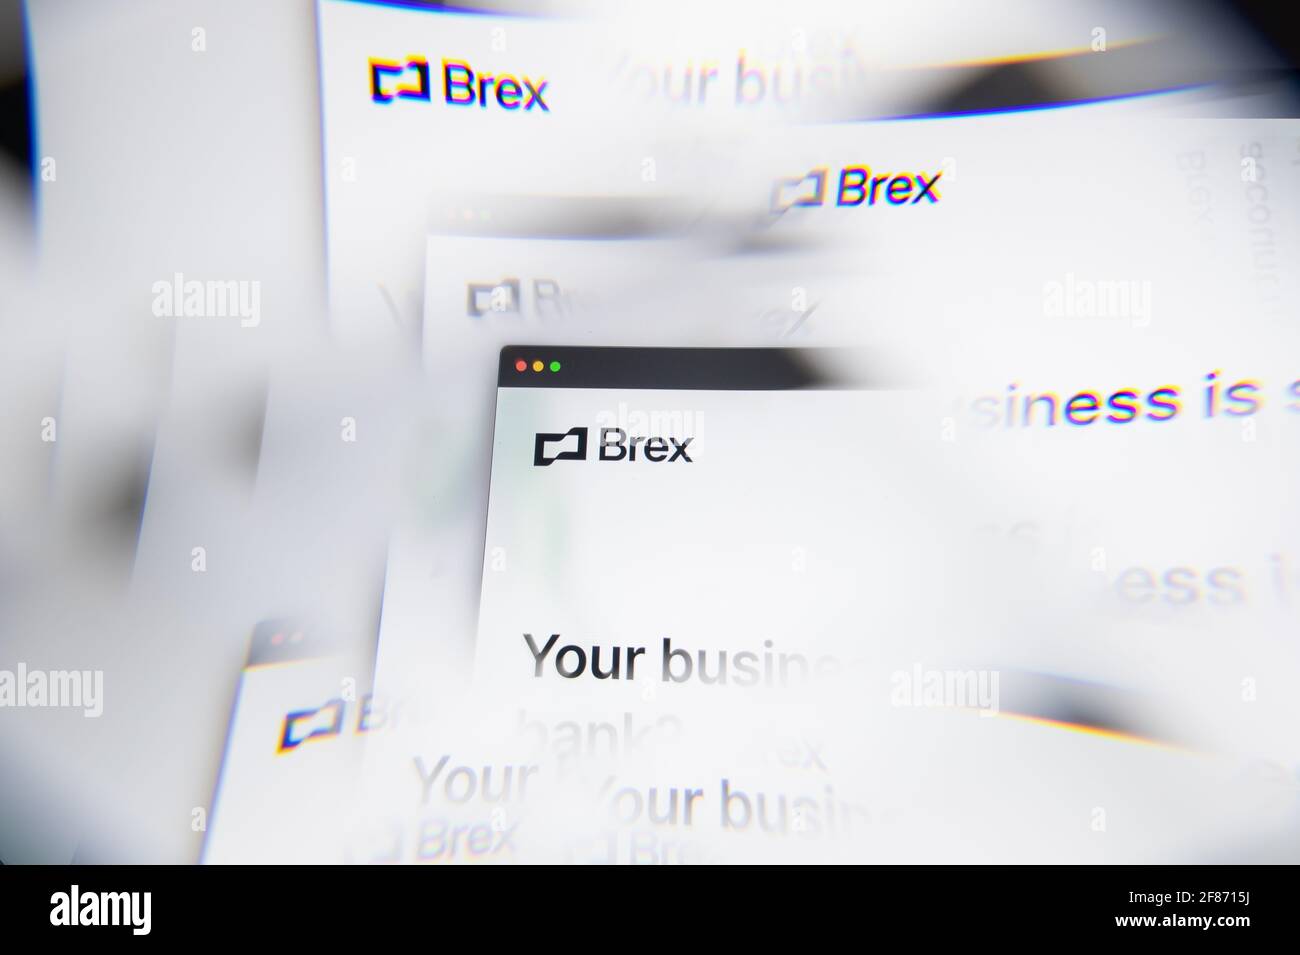 Milan, Italy - APRIL 10, 2021: Brex logo on laptop screen seen through an optical prism. Illustrative editorial image from Brex website. Stock Photo